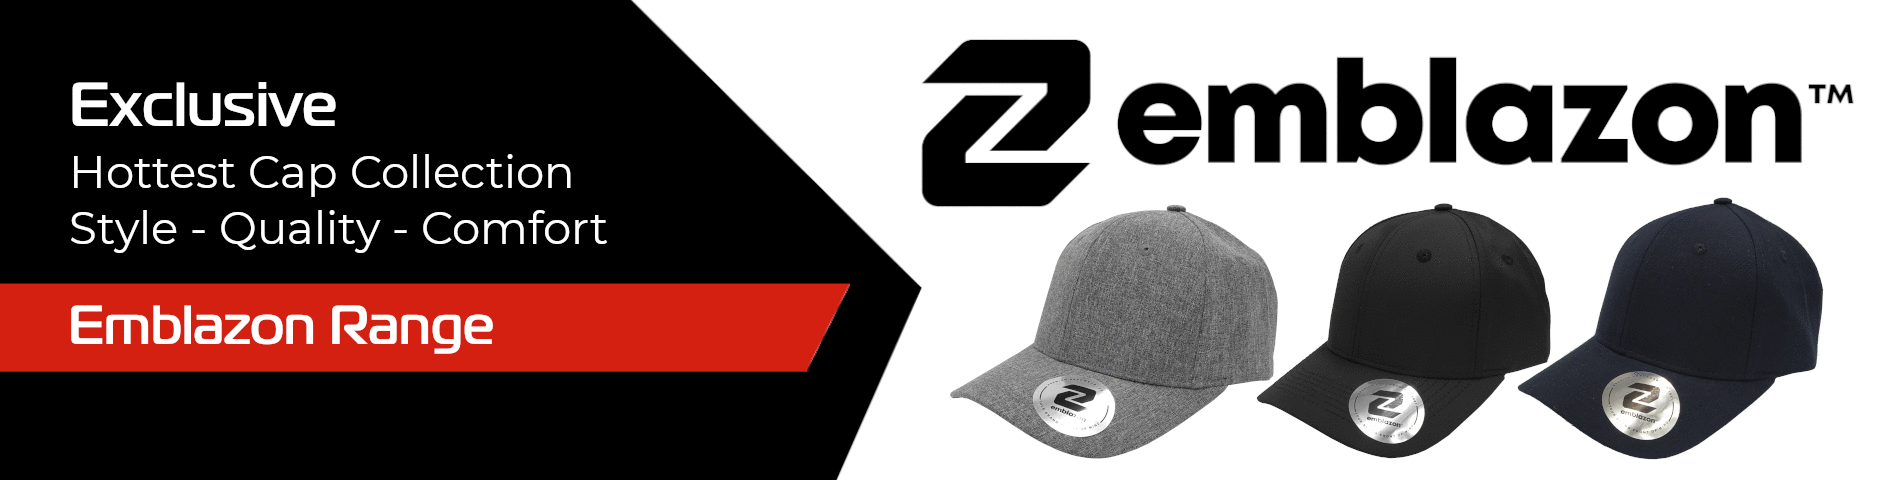 Exclusive - Emblazon Caps